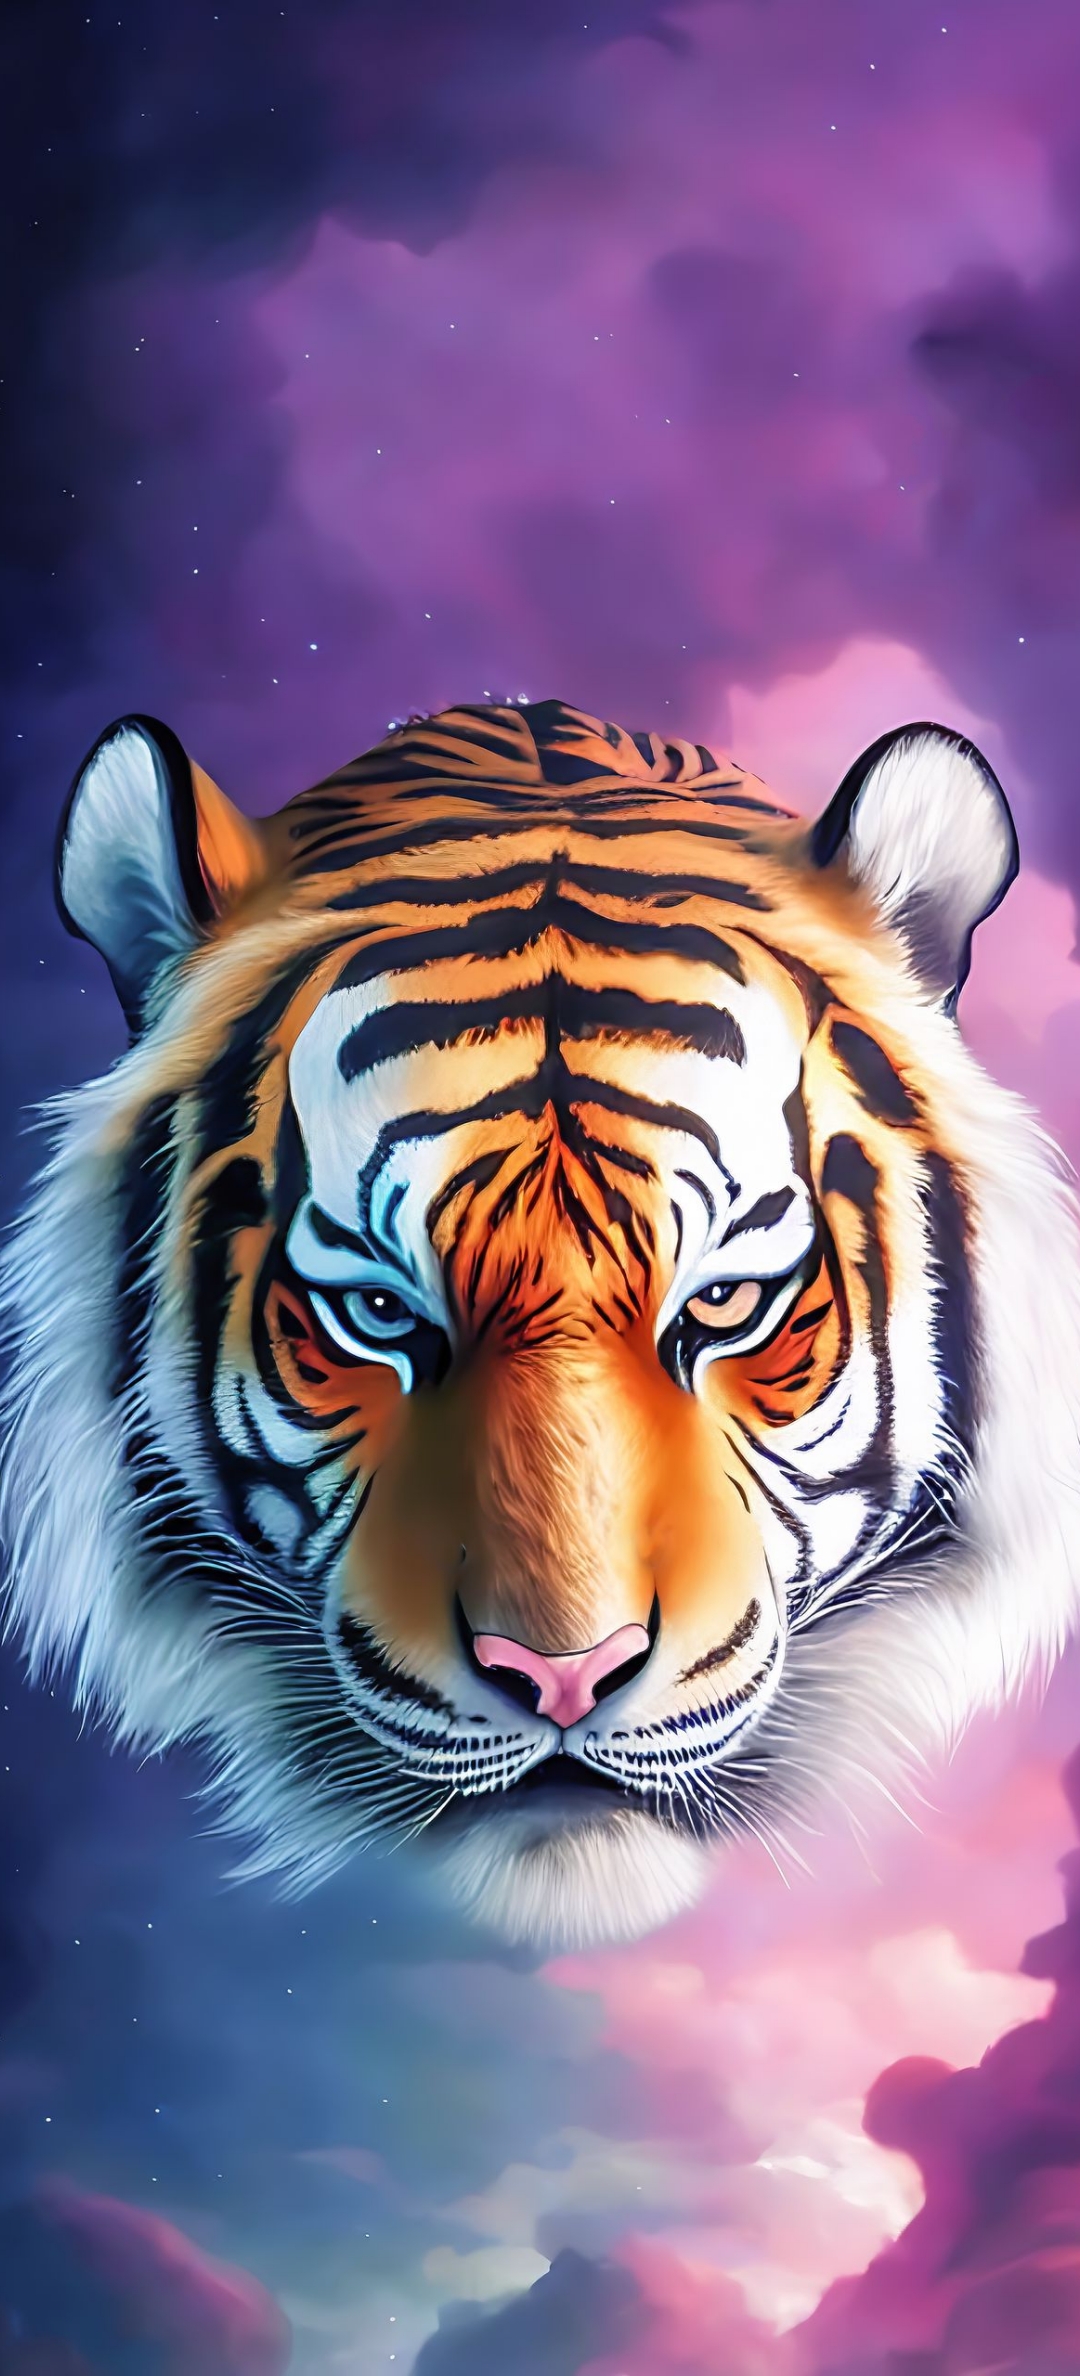 Fire Tiger Wallpaper for Samsung Galaxy Tab 4G LTE